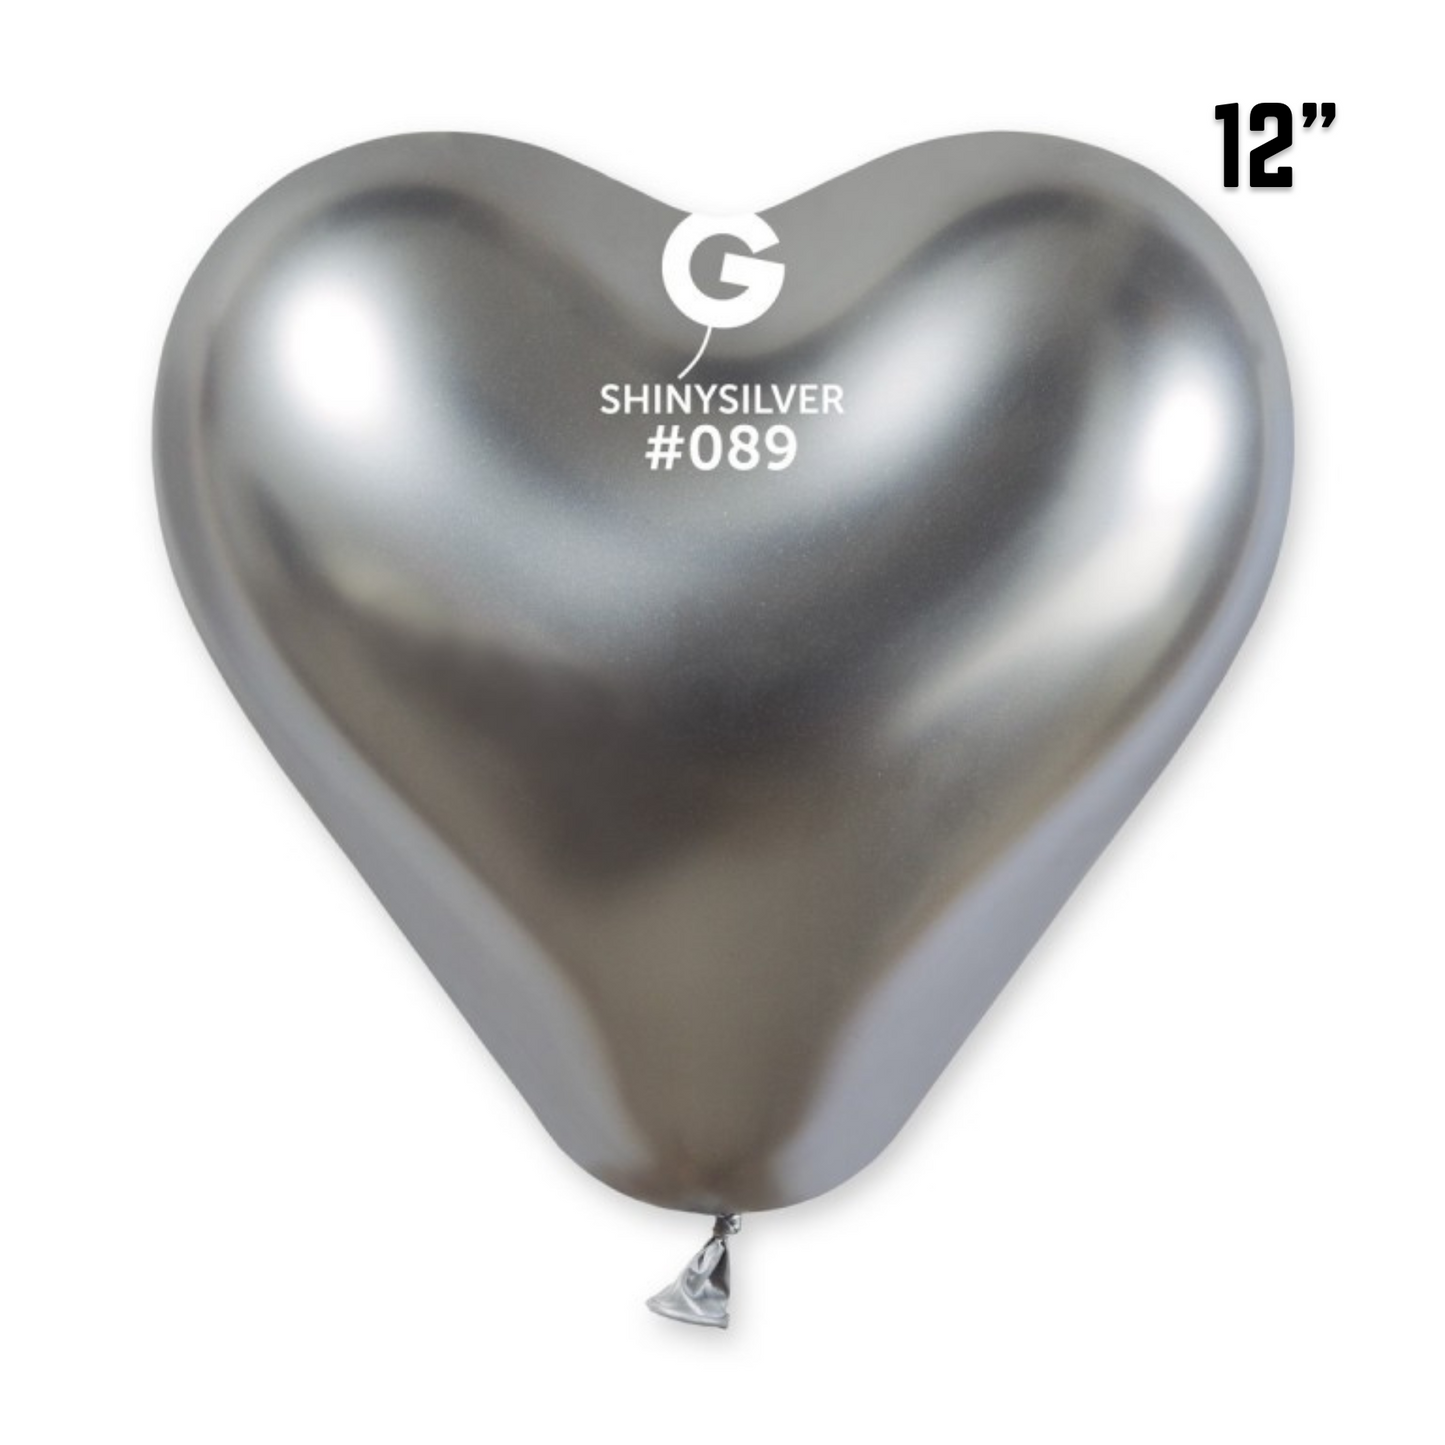 Shiny Silver Balloons 5” gemar #089